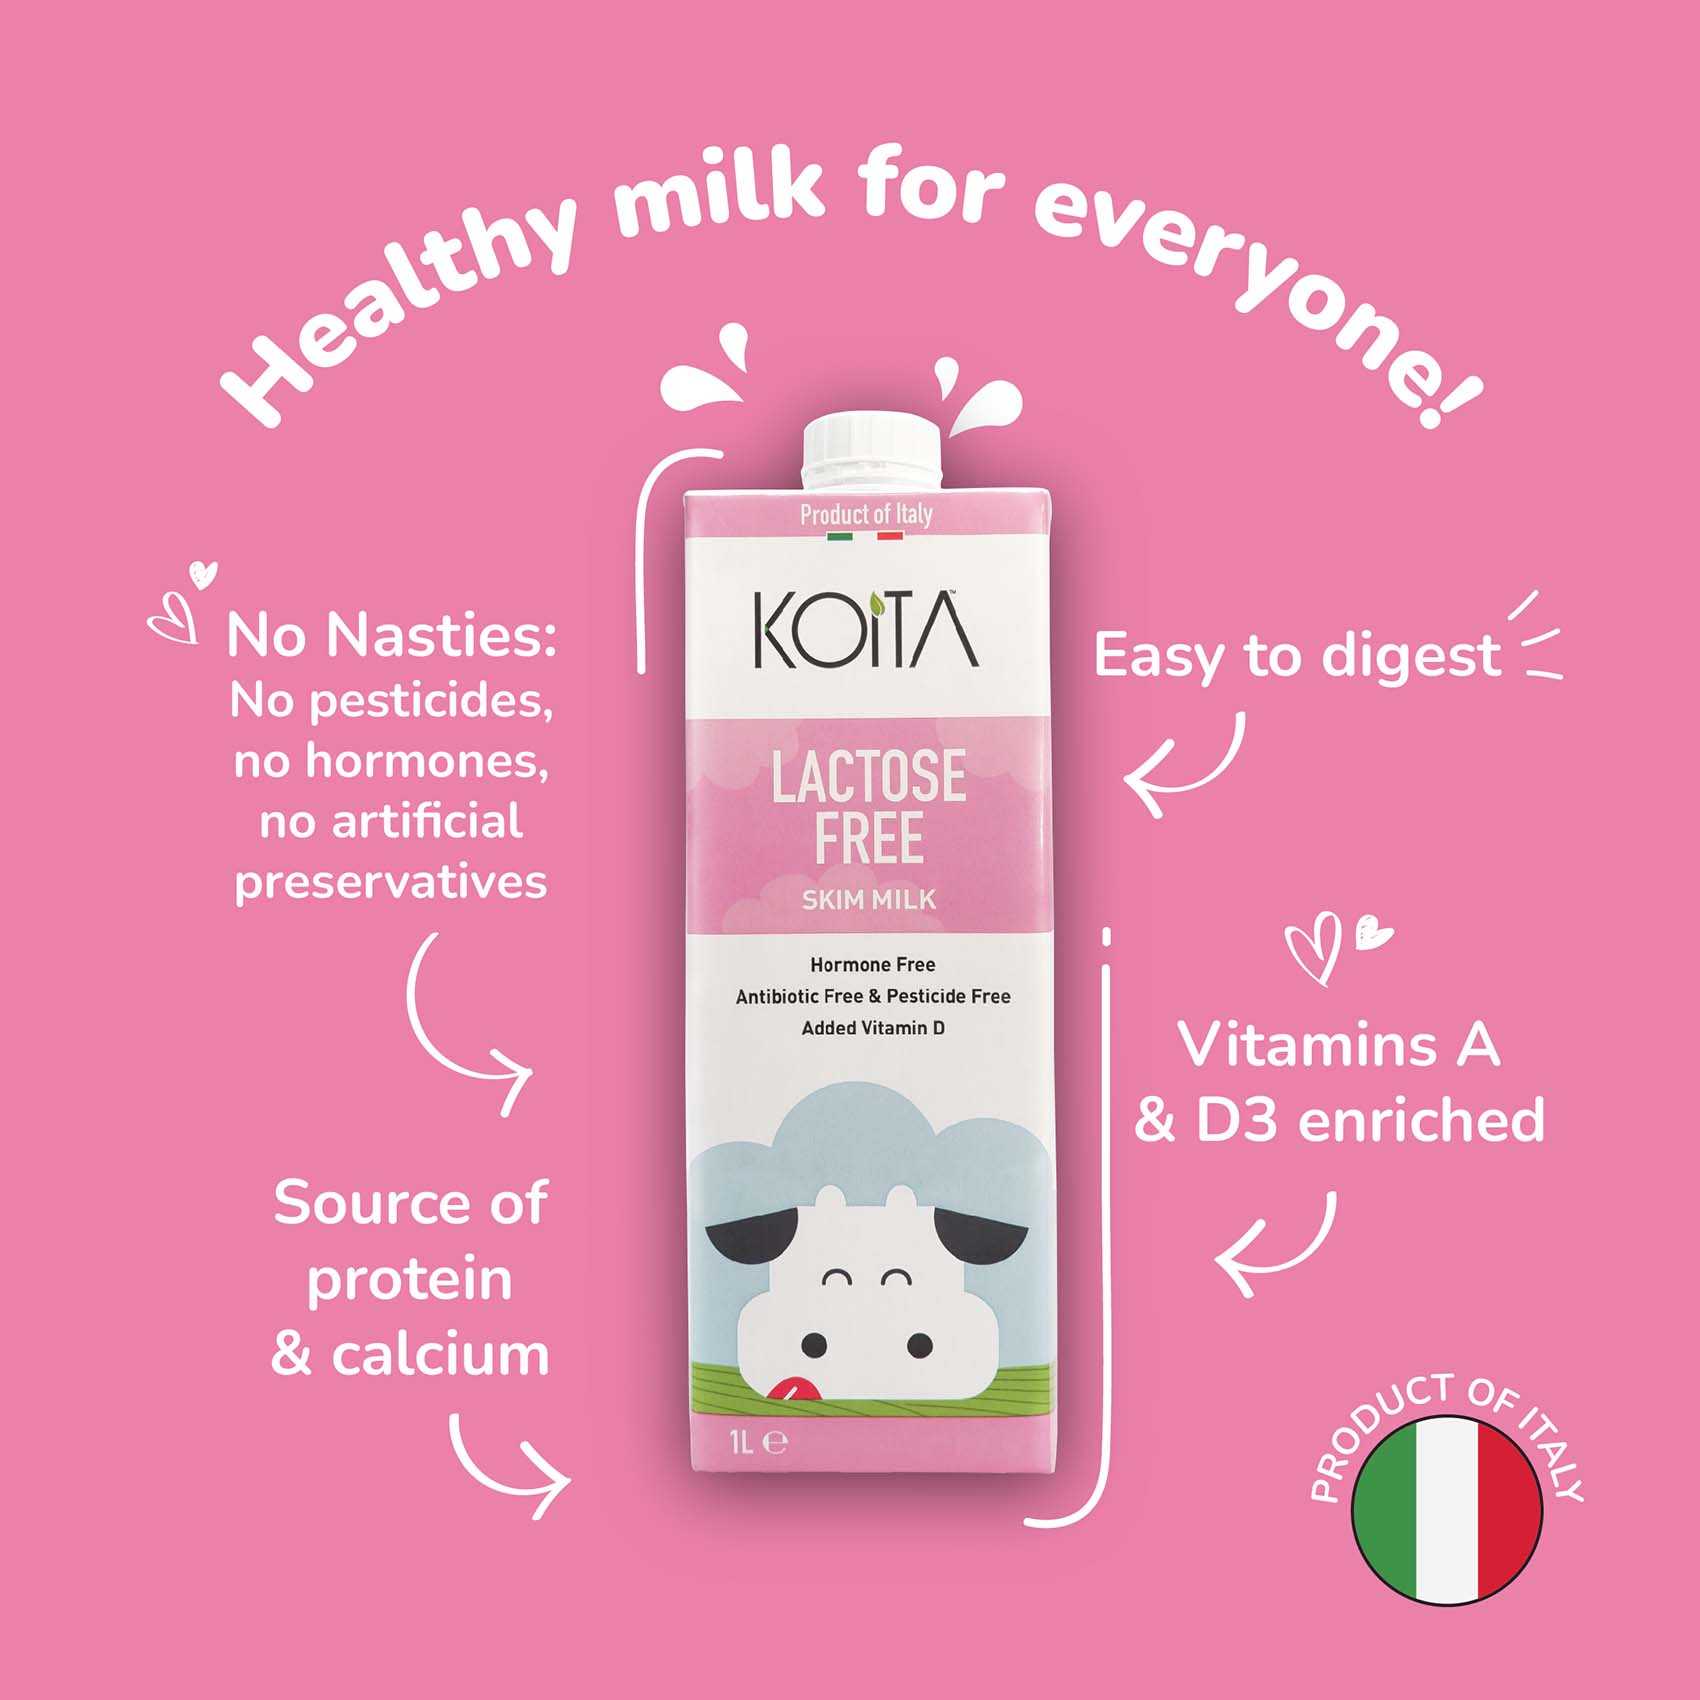 Koita Lactose Free Skim Milk 1L